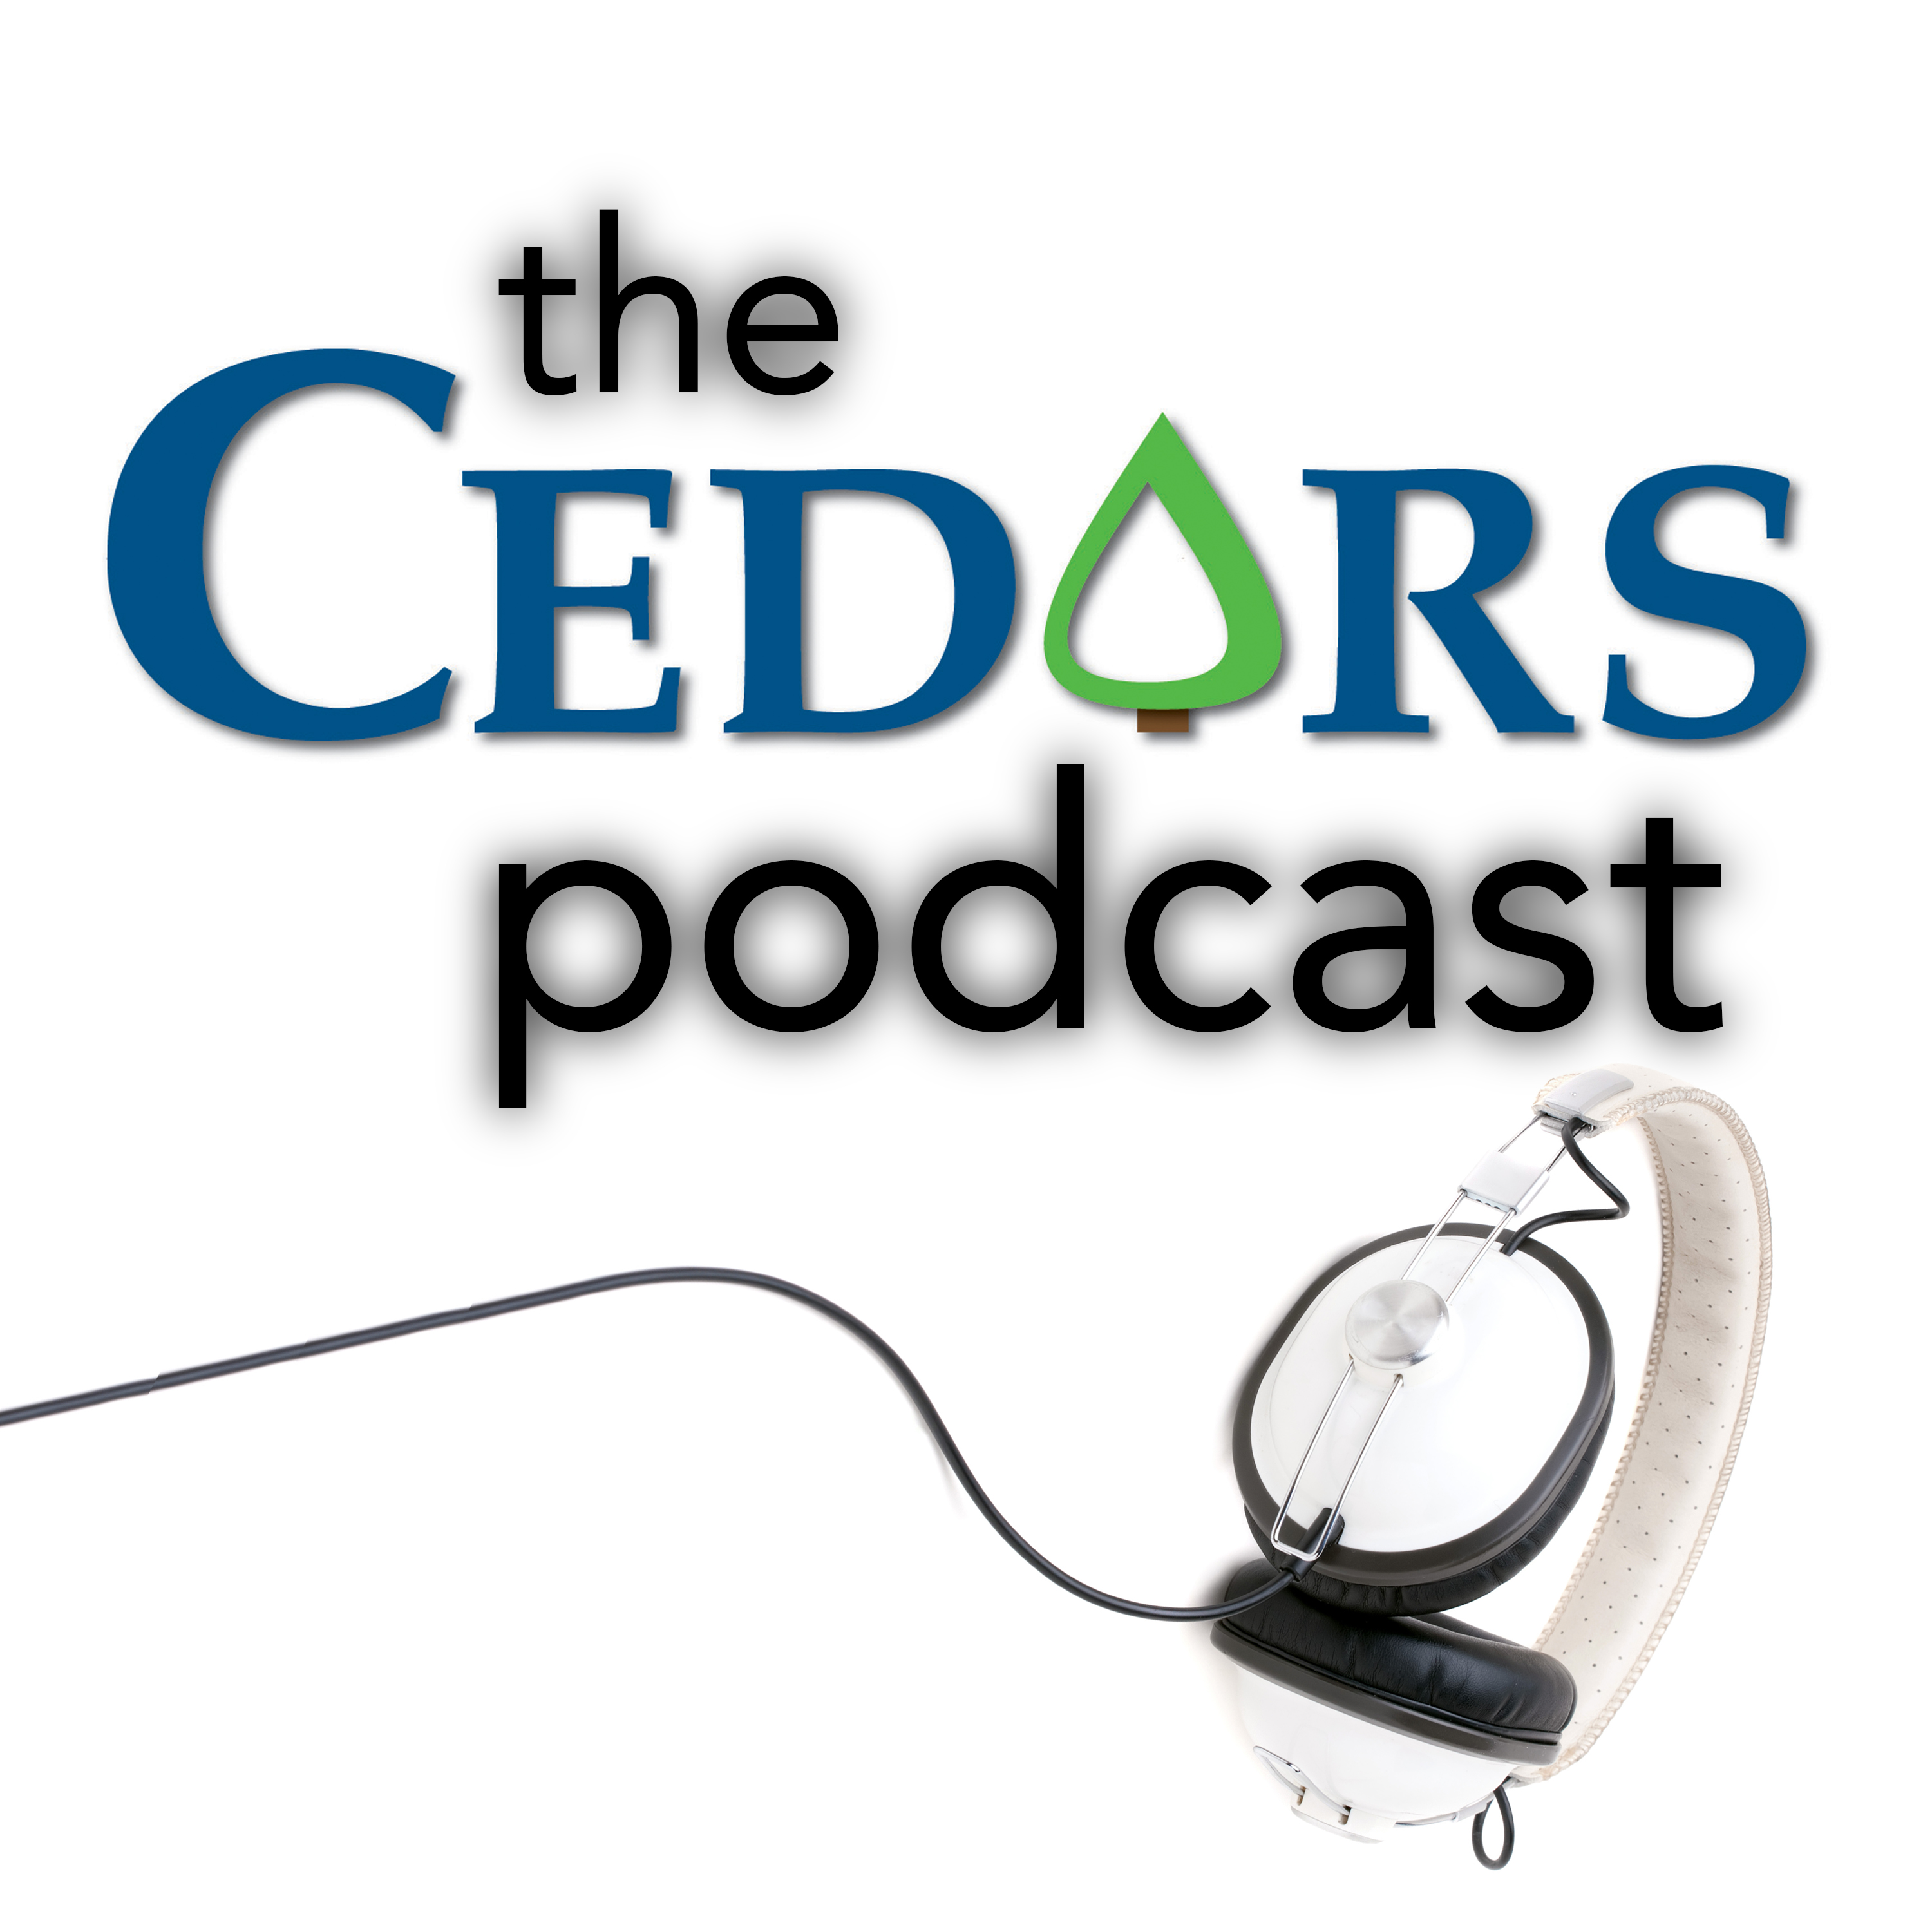 Cedars Podcast